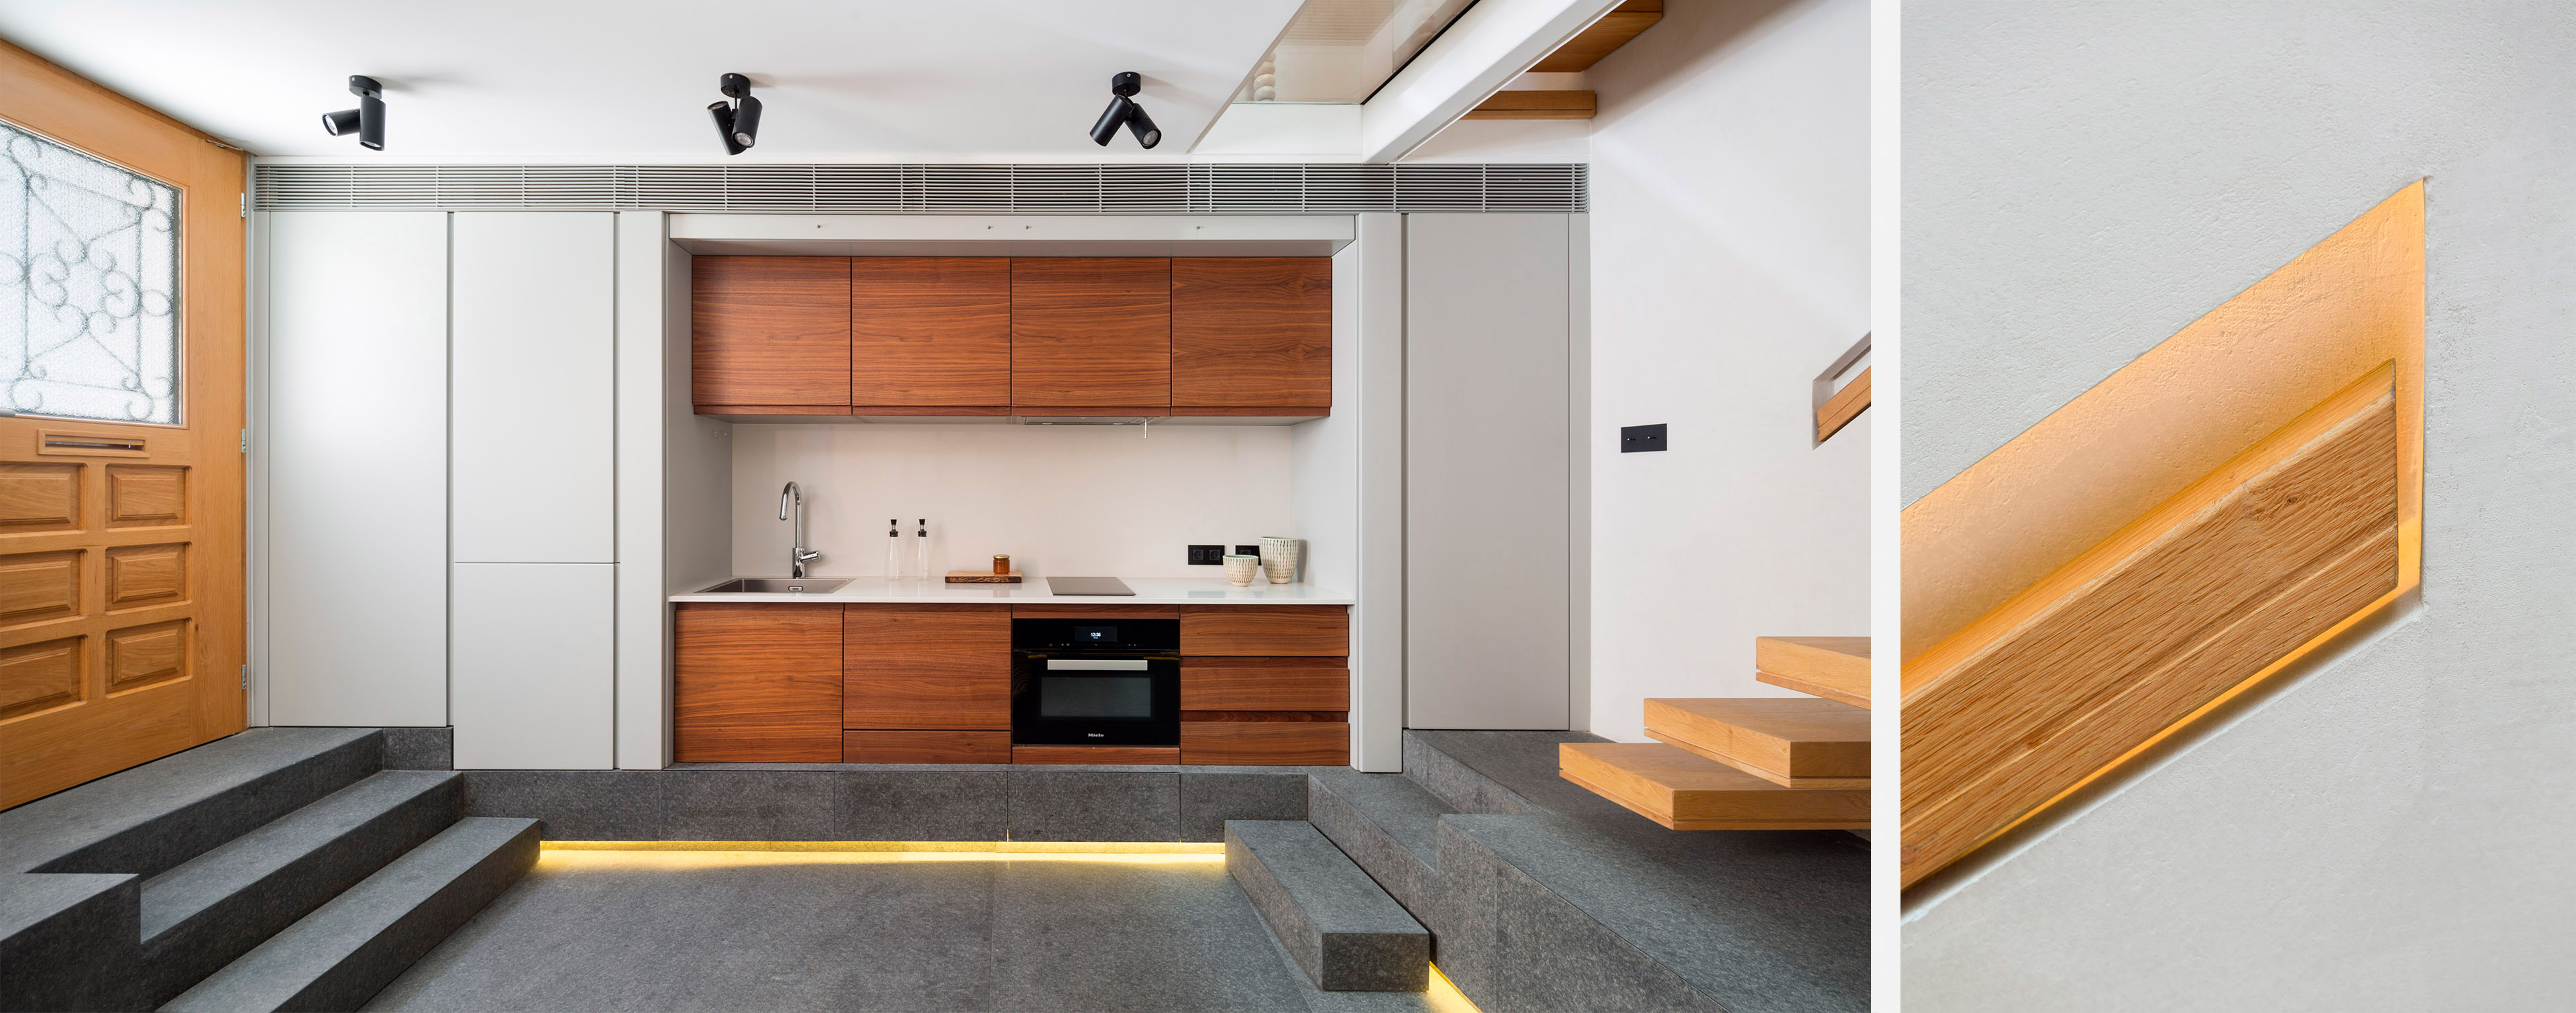 luv studio luxury architects algarve nano house IMG 01 - LUV Studio - Architecture et design - Barcelone